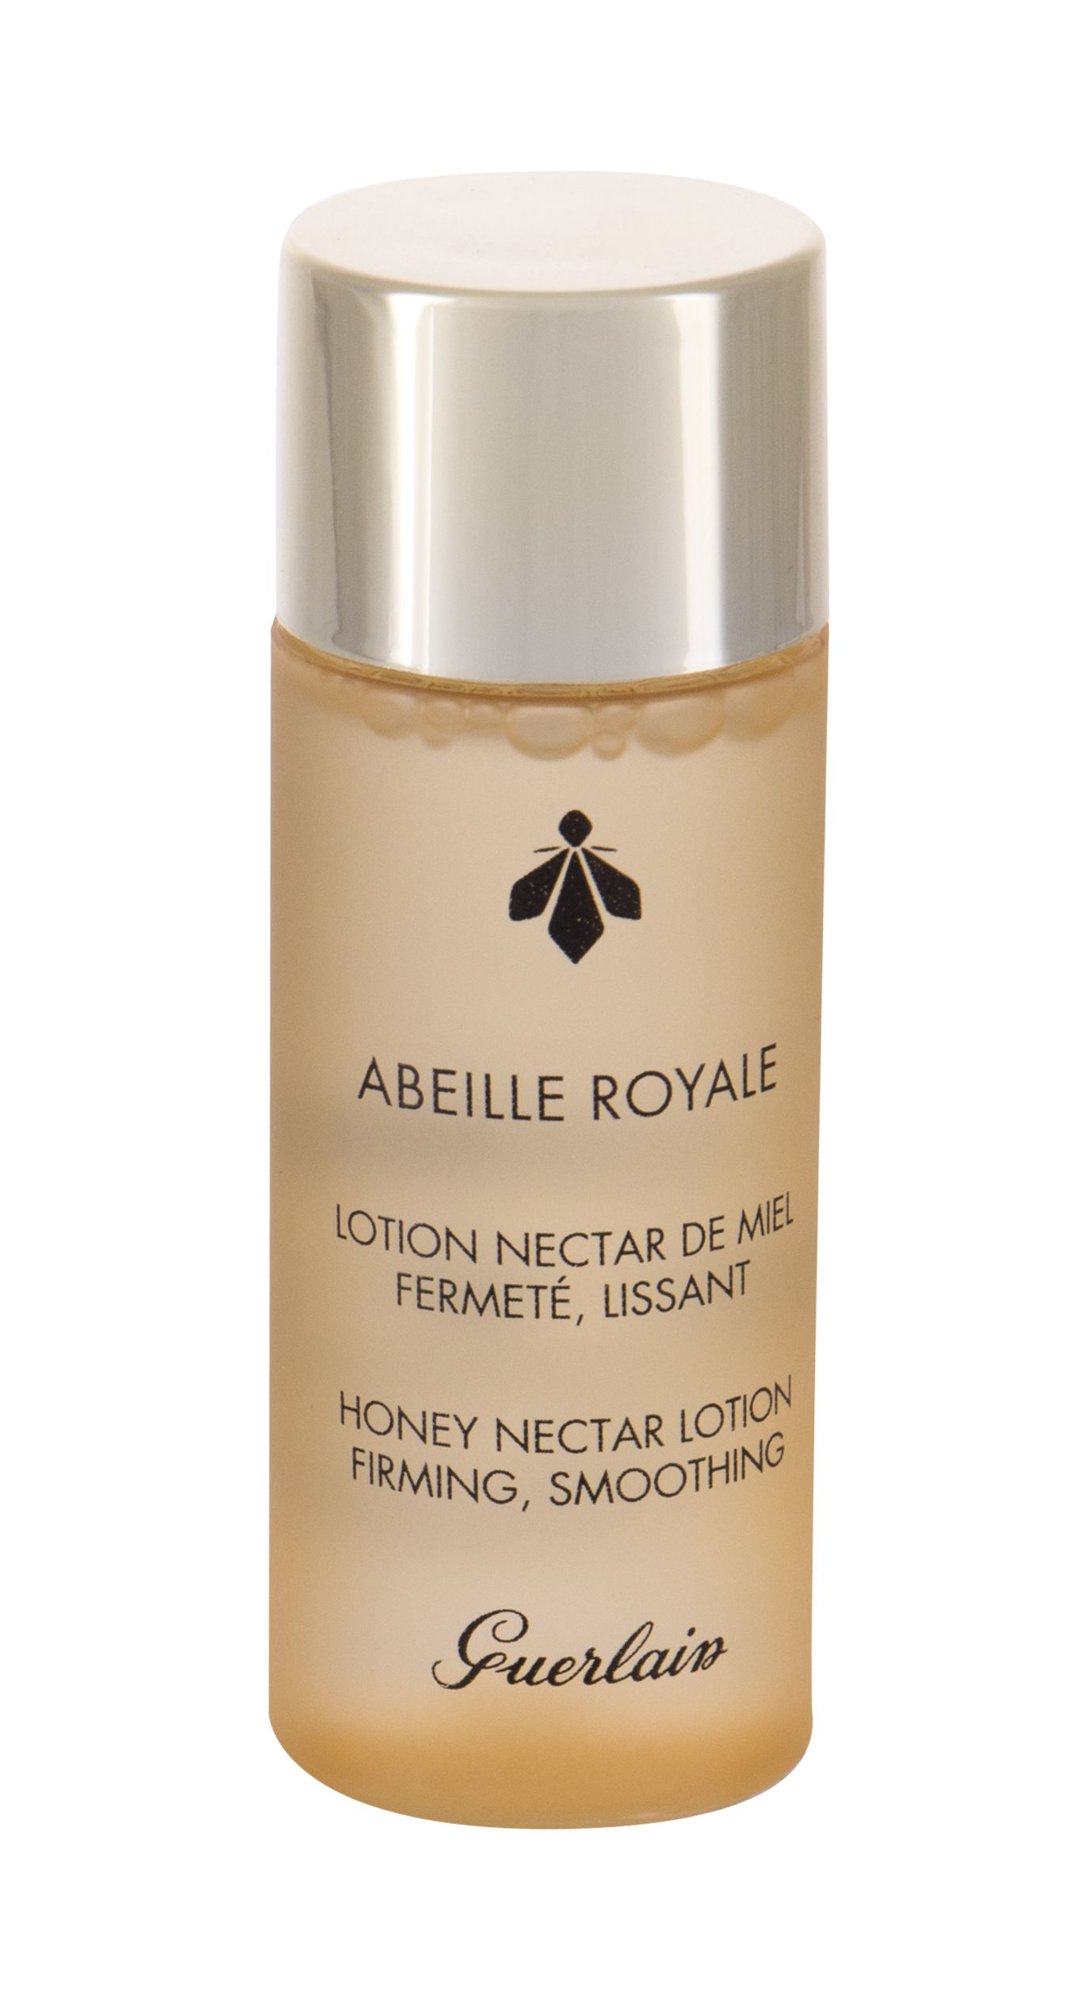 Guerlain Abeille Royale Honey Nectar Lotion 40ml valomasis vanduo veidui